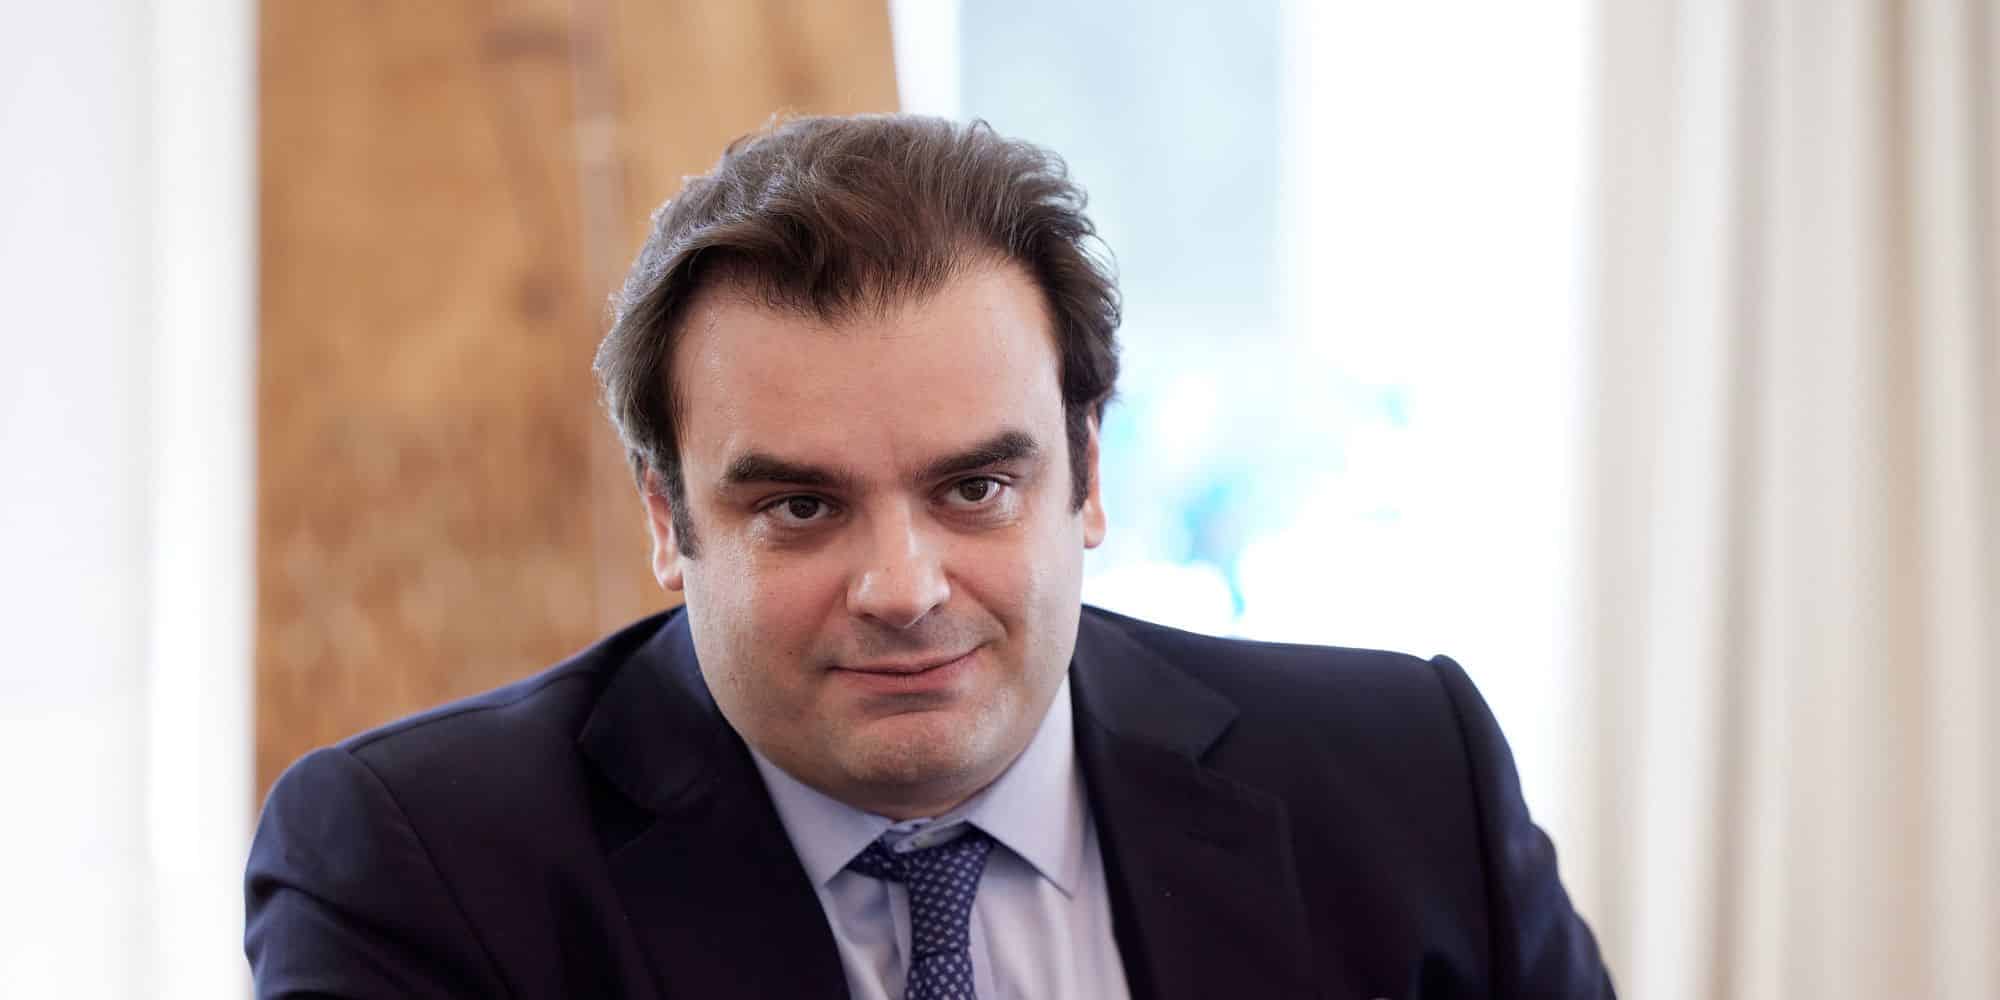 O υπουργός Ψηφιακής Διακυβέρνησης Κυριάκος Πιερρακάκης